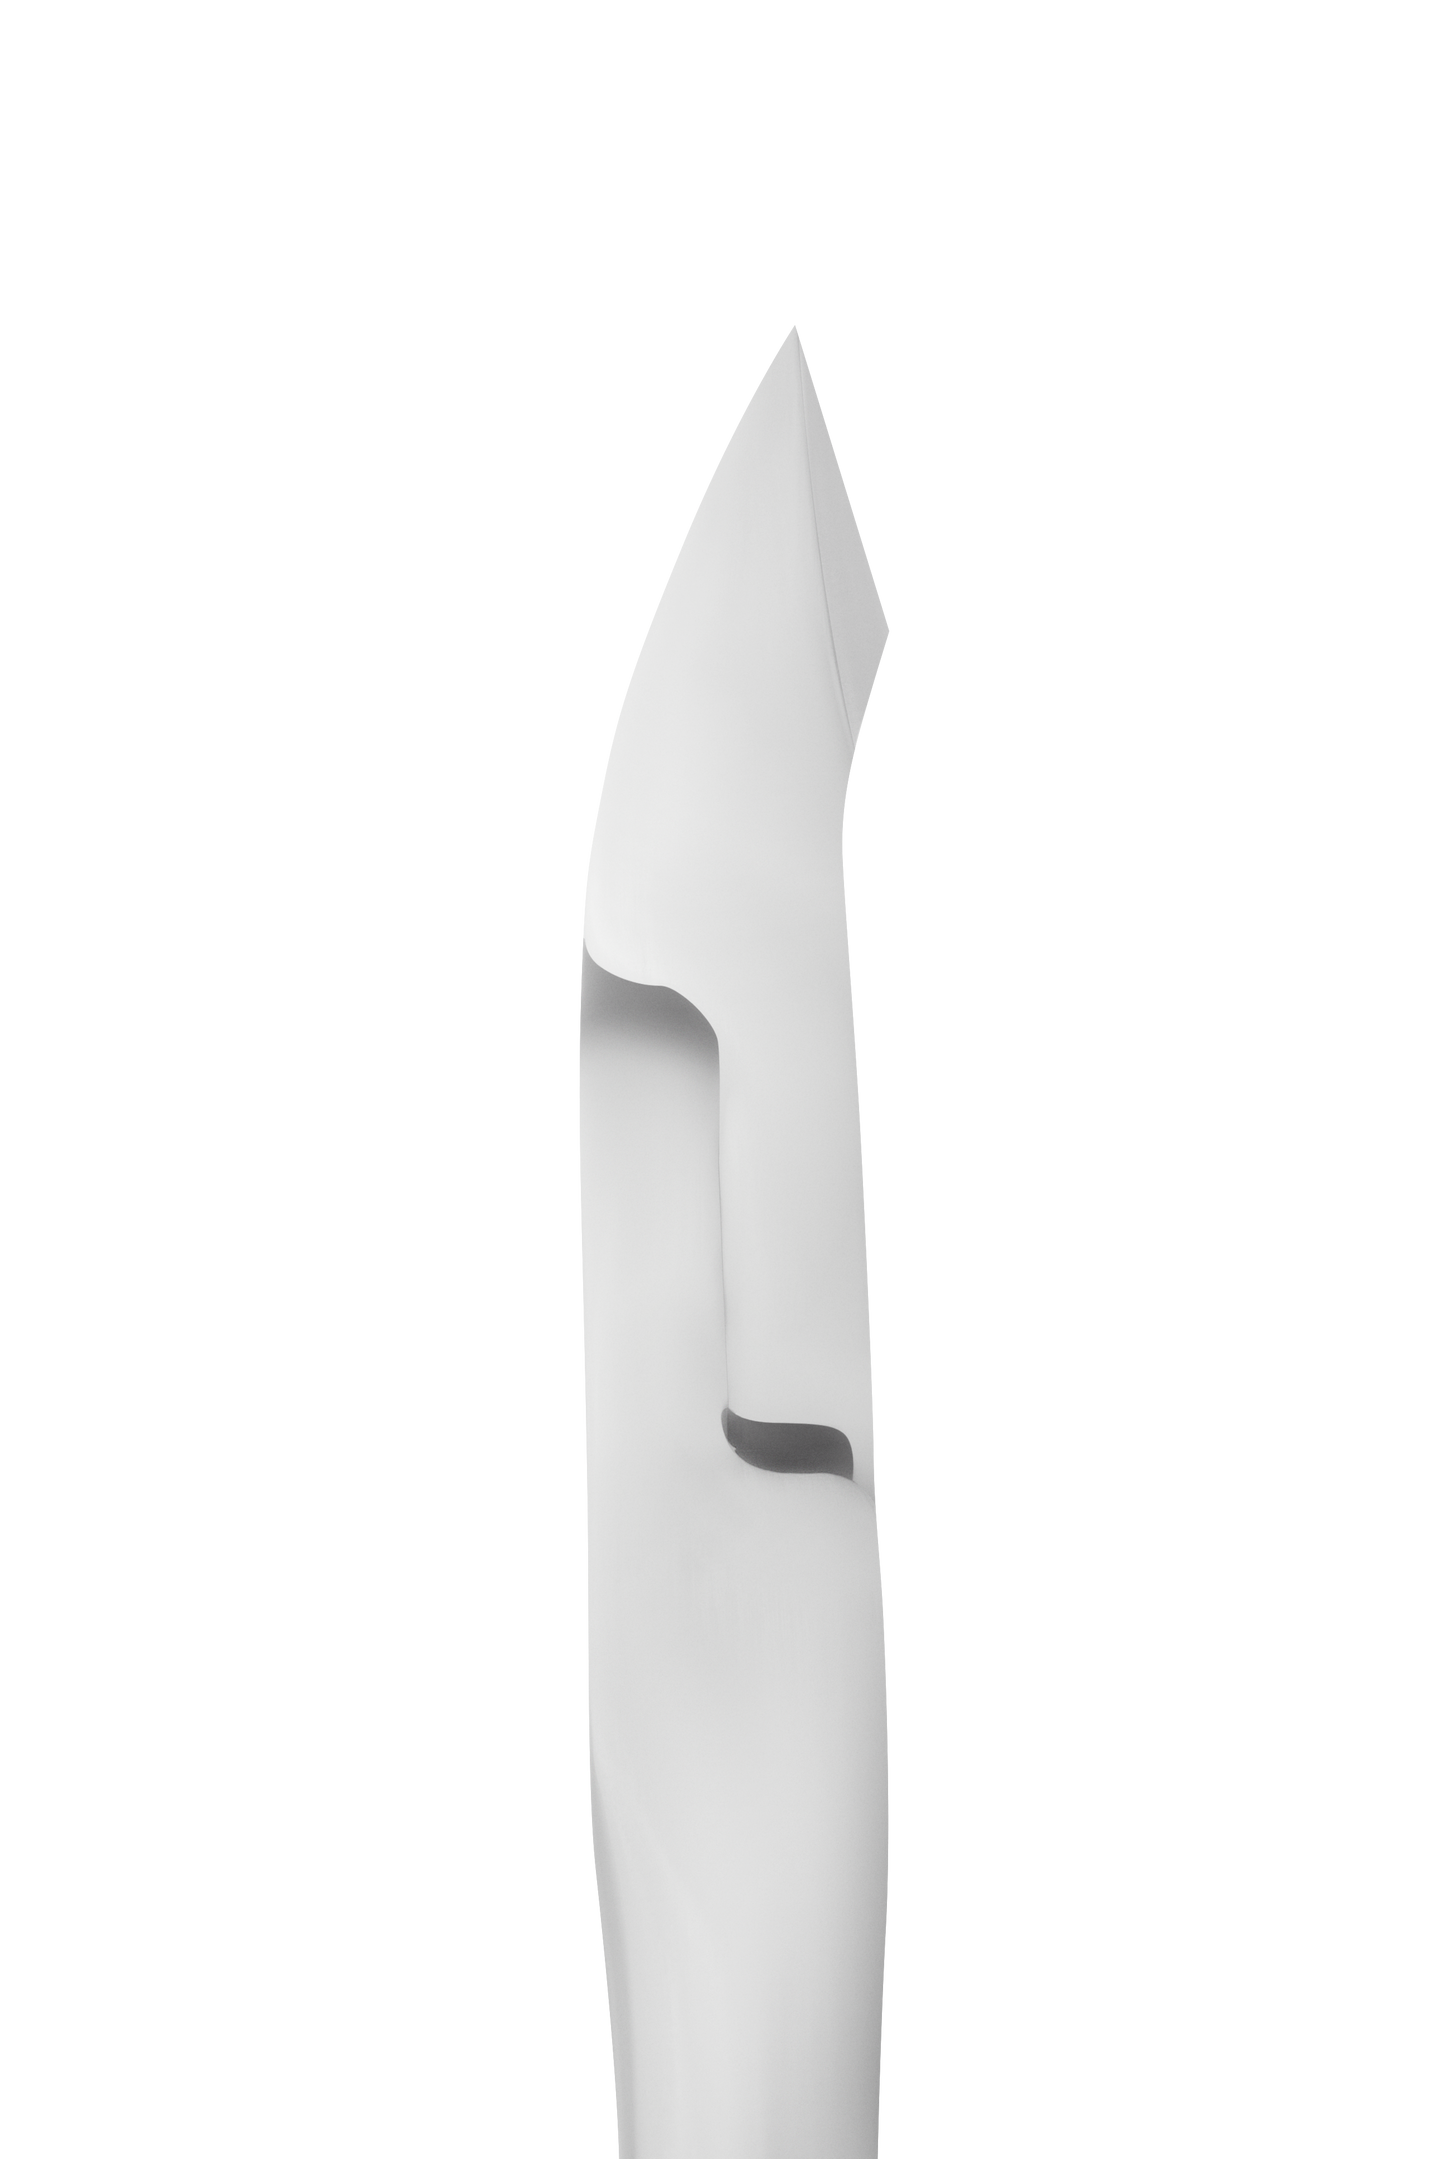 STALEKS PRO Expert Cuticle Nippers, model NE-90-7 (7mm Blade)